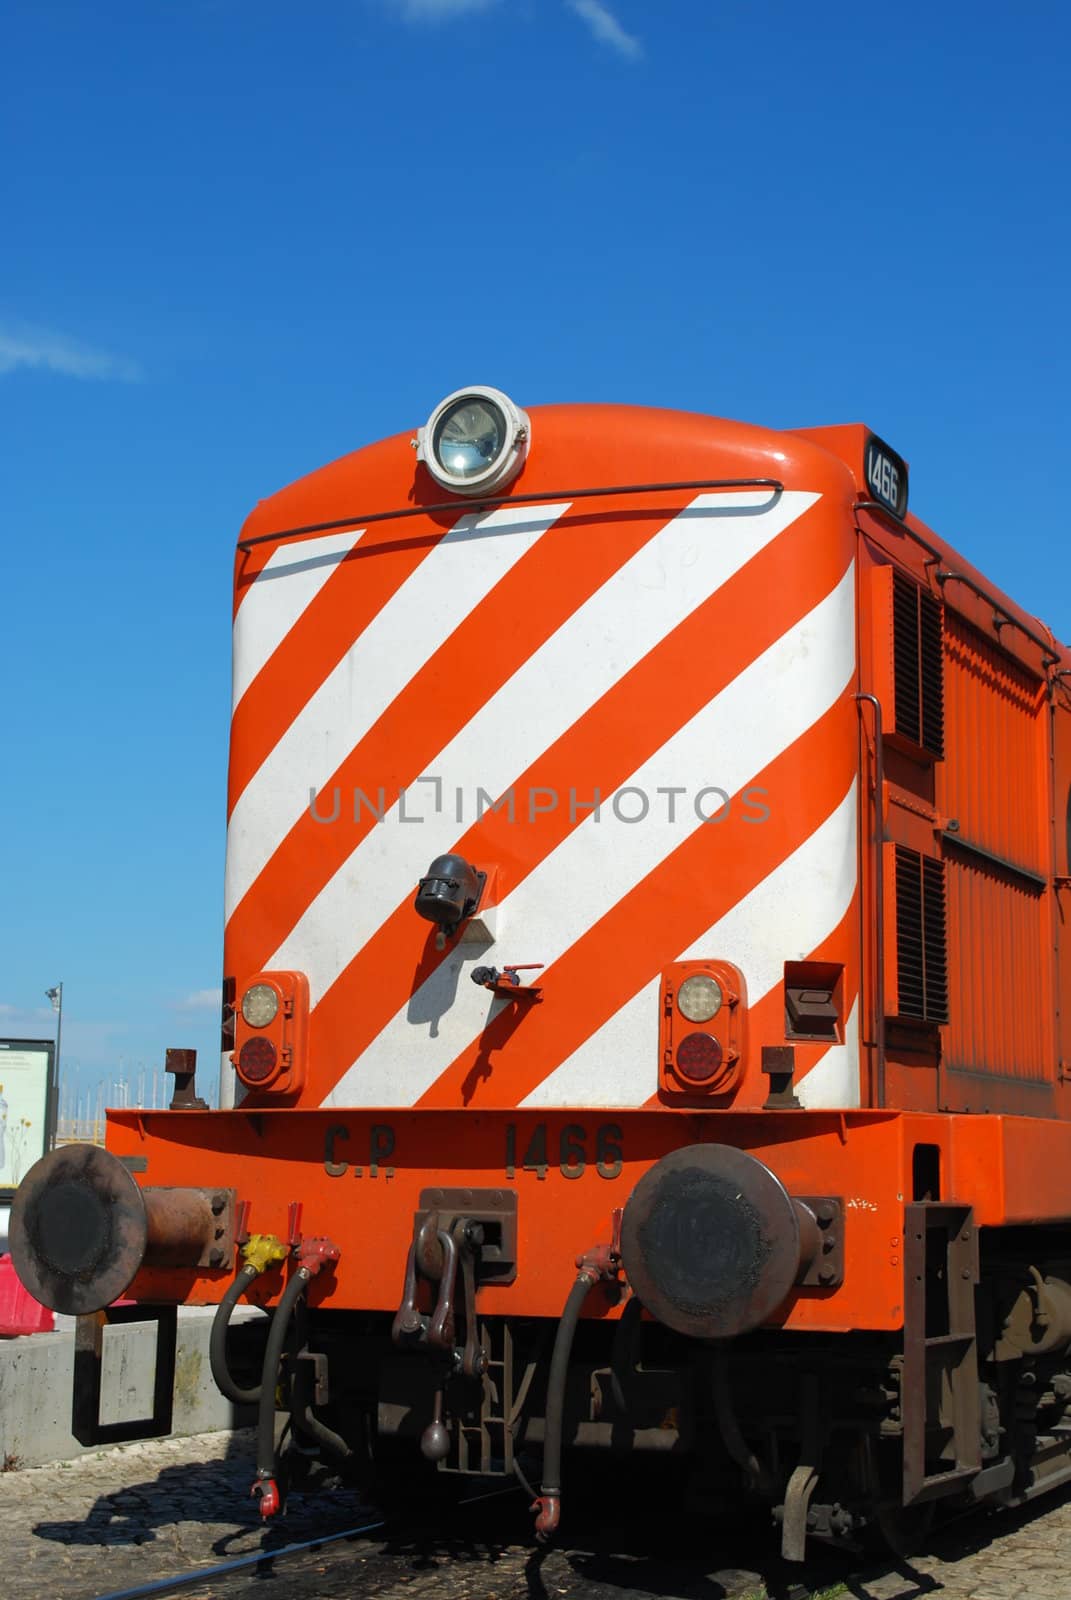 Antique and orange transportation train by luissantos84